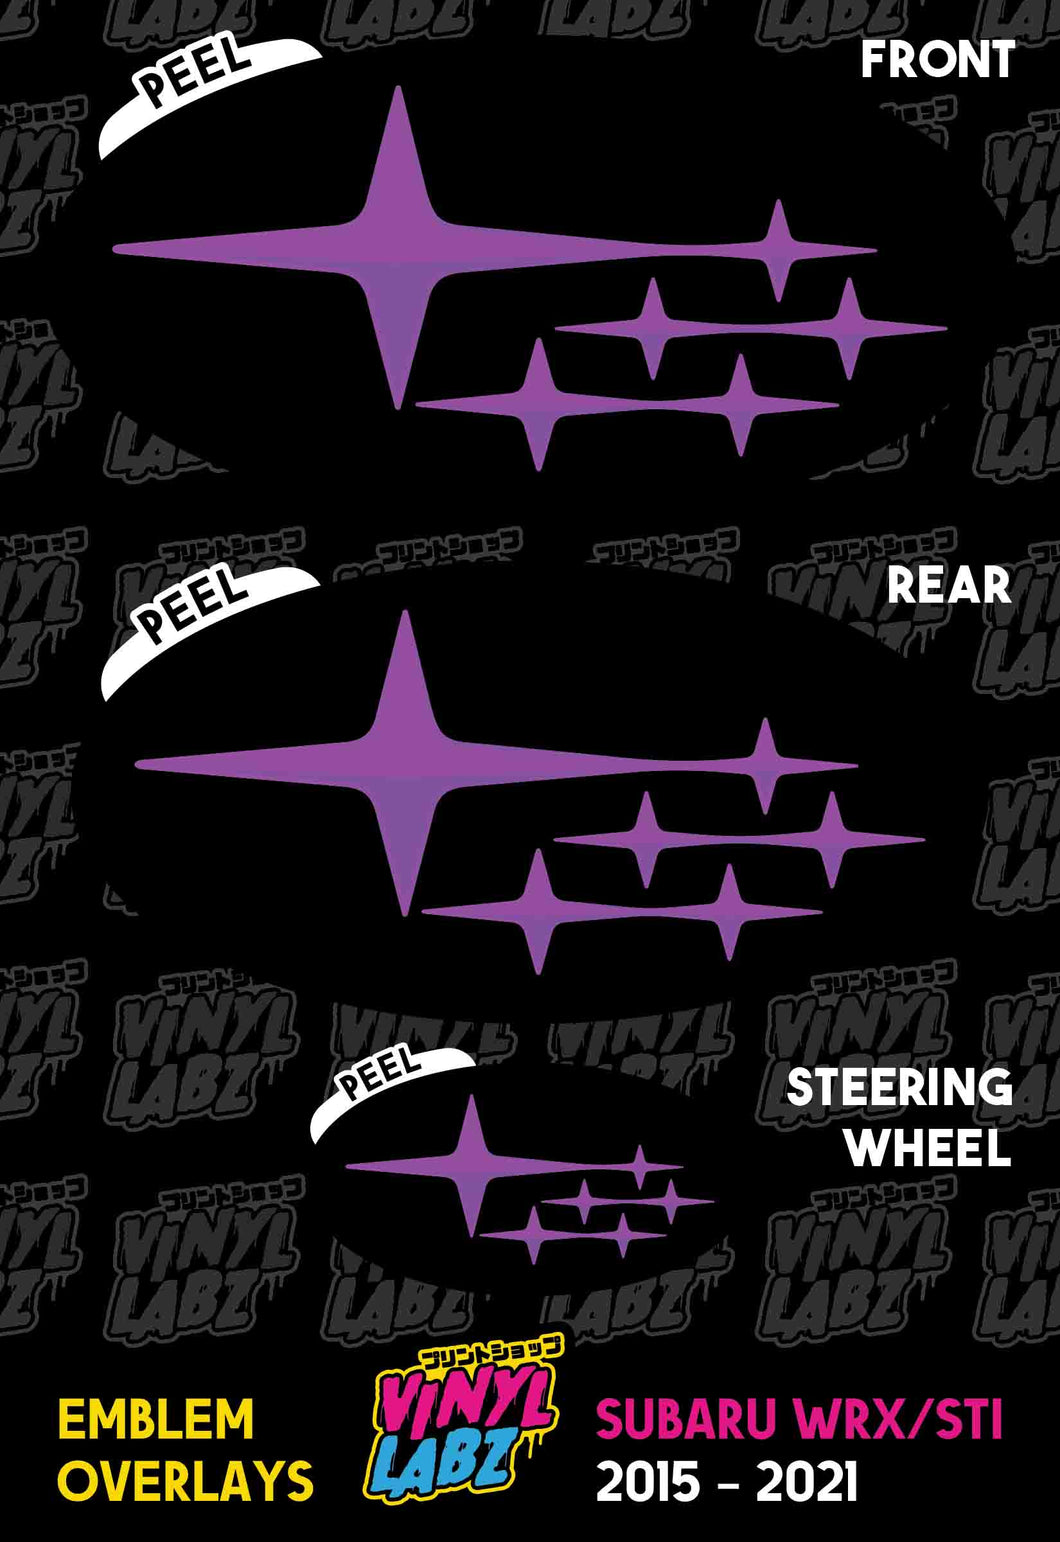 Subaru Vinyl Emblem Overlay (Black and Purple) | 2015-2021 Subaru WRX/STI